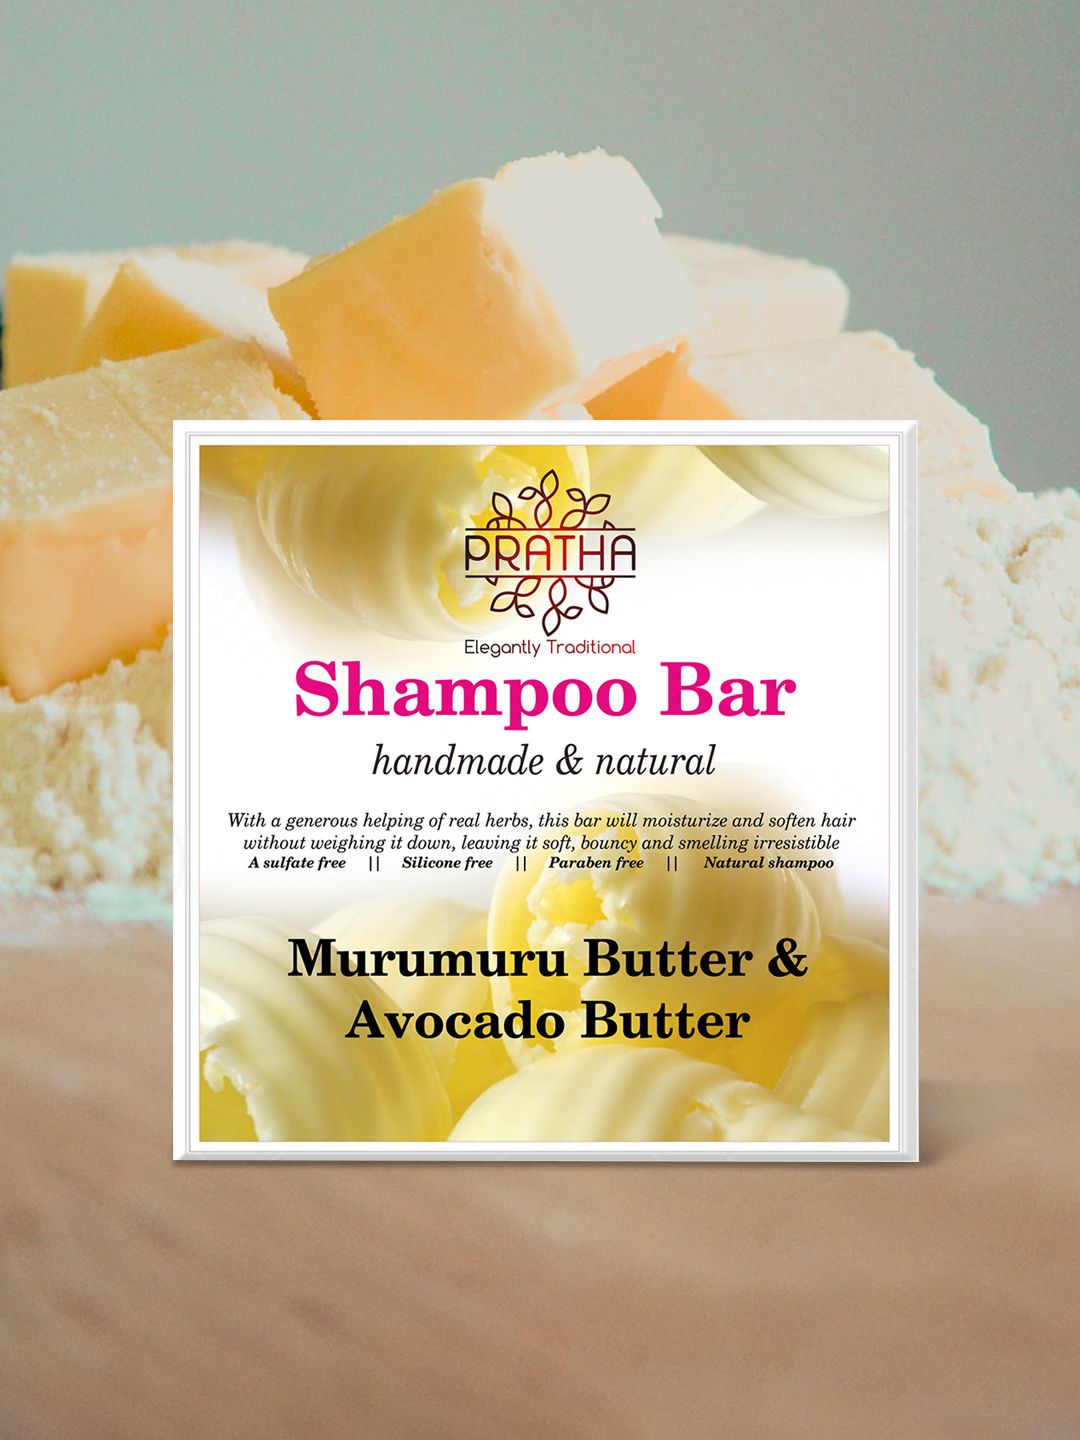 Pratha Handmade & Natural Volumizing Murumuru Butter & Avocado Butter Shampoo Bar - 80 gm Price in India